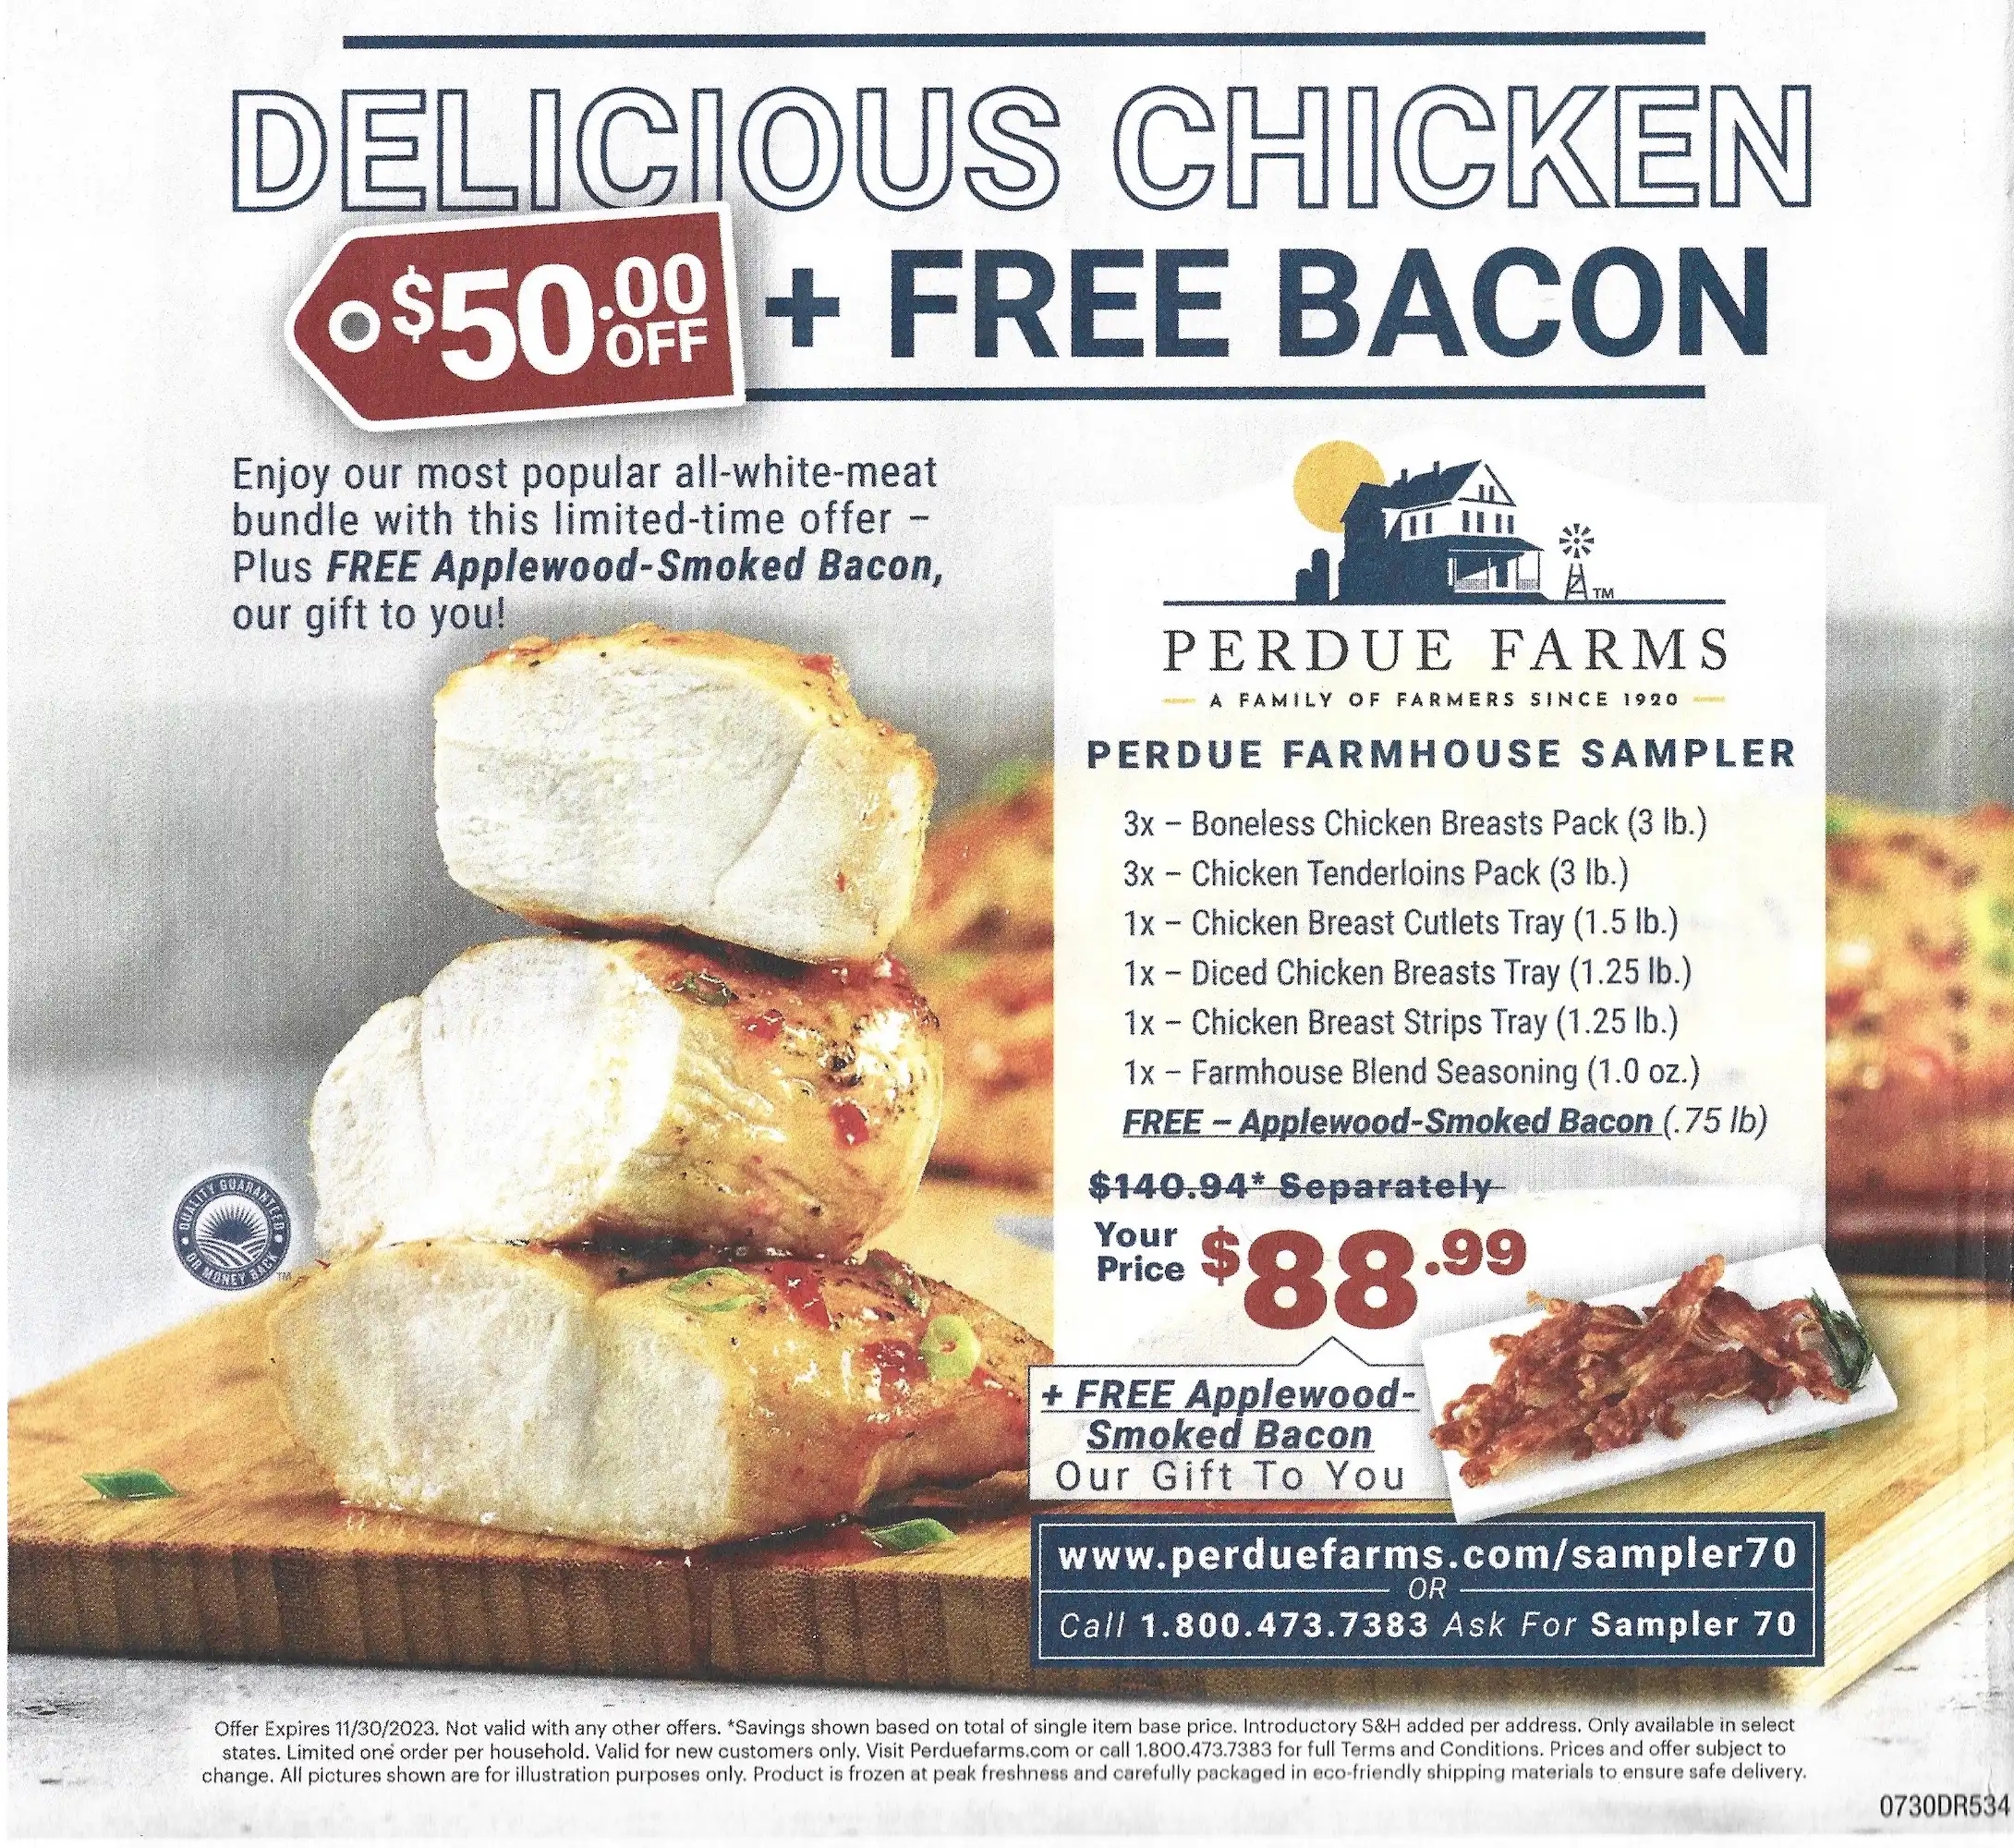 Perdue Farms Sampler Code: Farmhouse Sampler + Free Applewood Smoked Bacon - Expires 11/30/2023